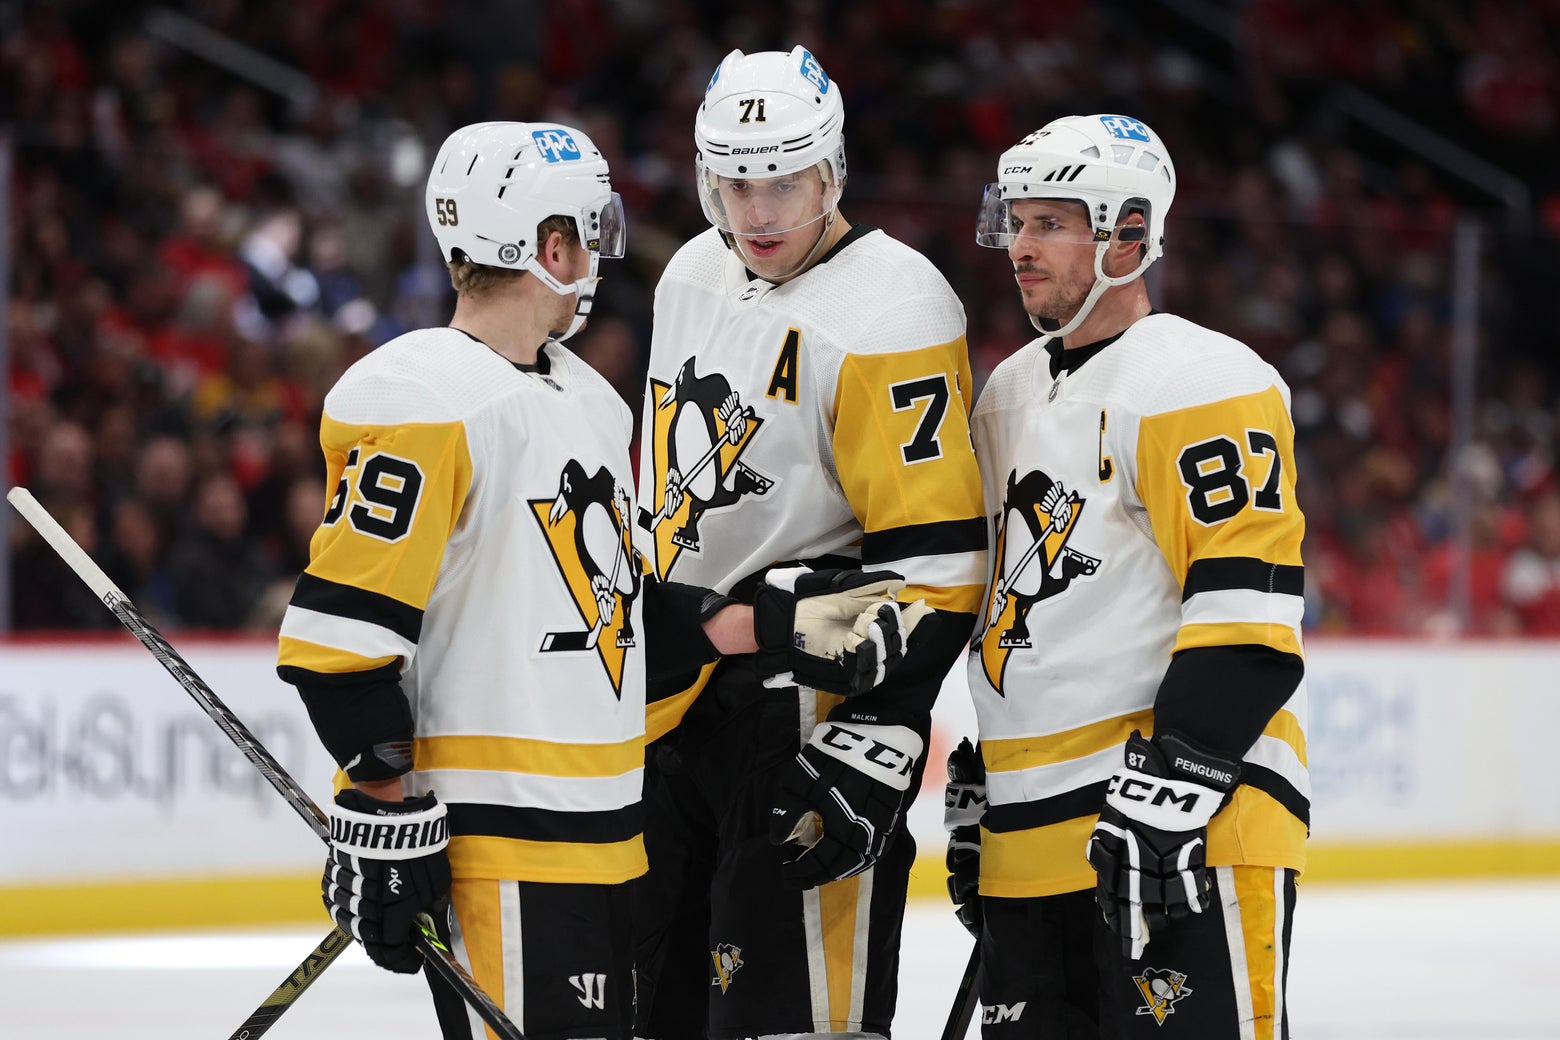 Penguins' core of Sidney Crosby, Kris Letang, Evgeni Malkin still driven  entering record-setting season together